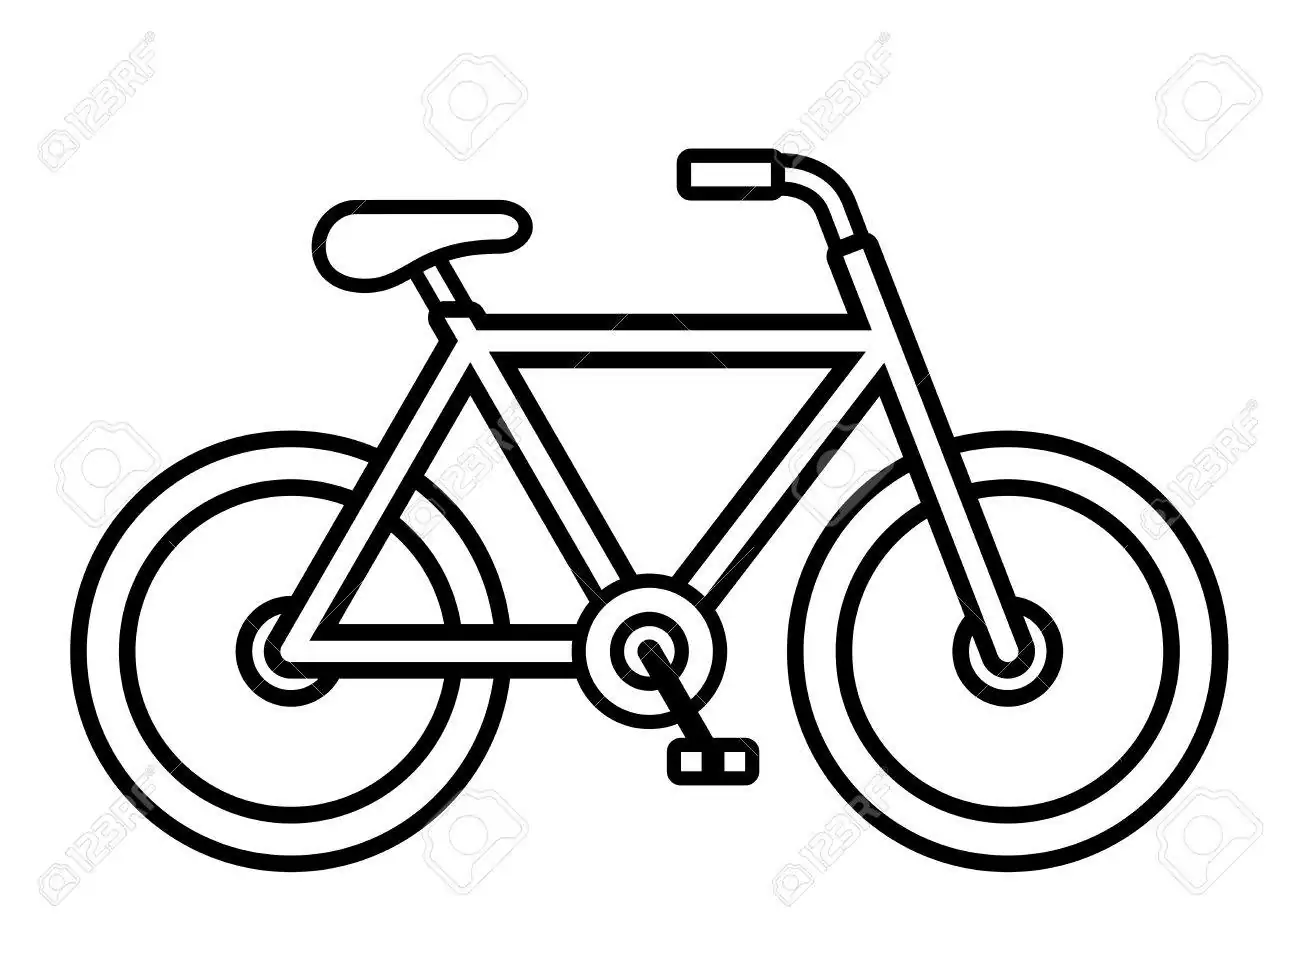 Bicycle (Bike)